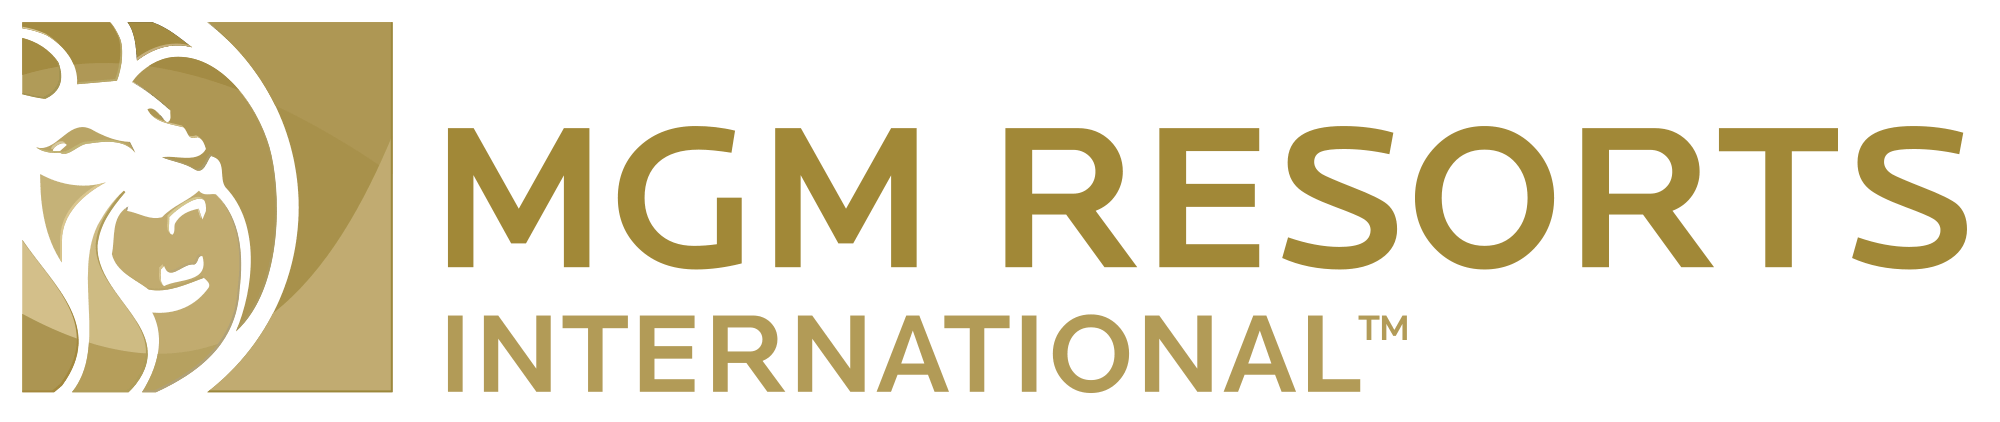 MGM Resorts Logo - MGM Resorts International